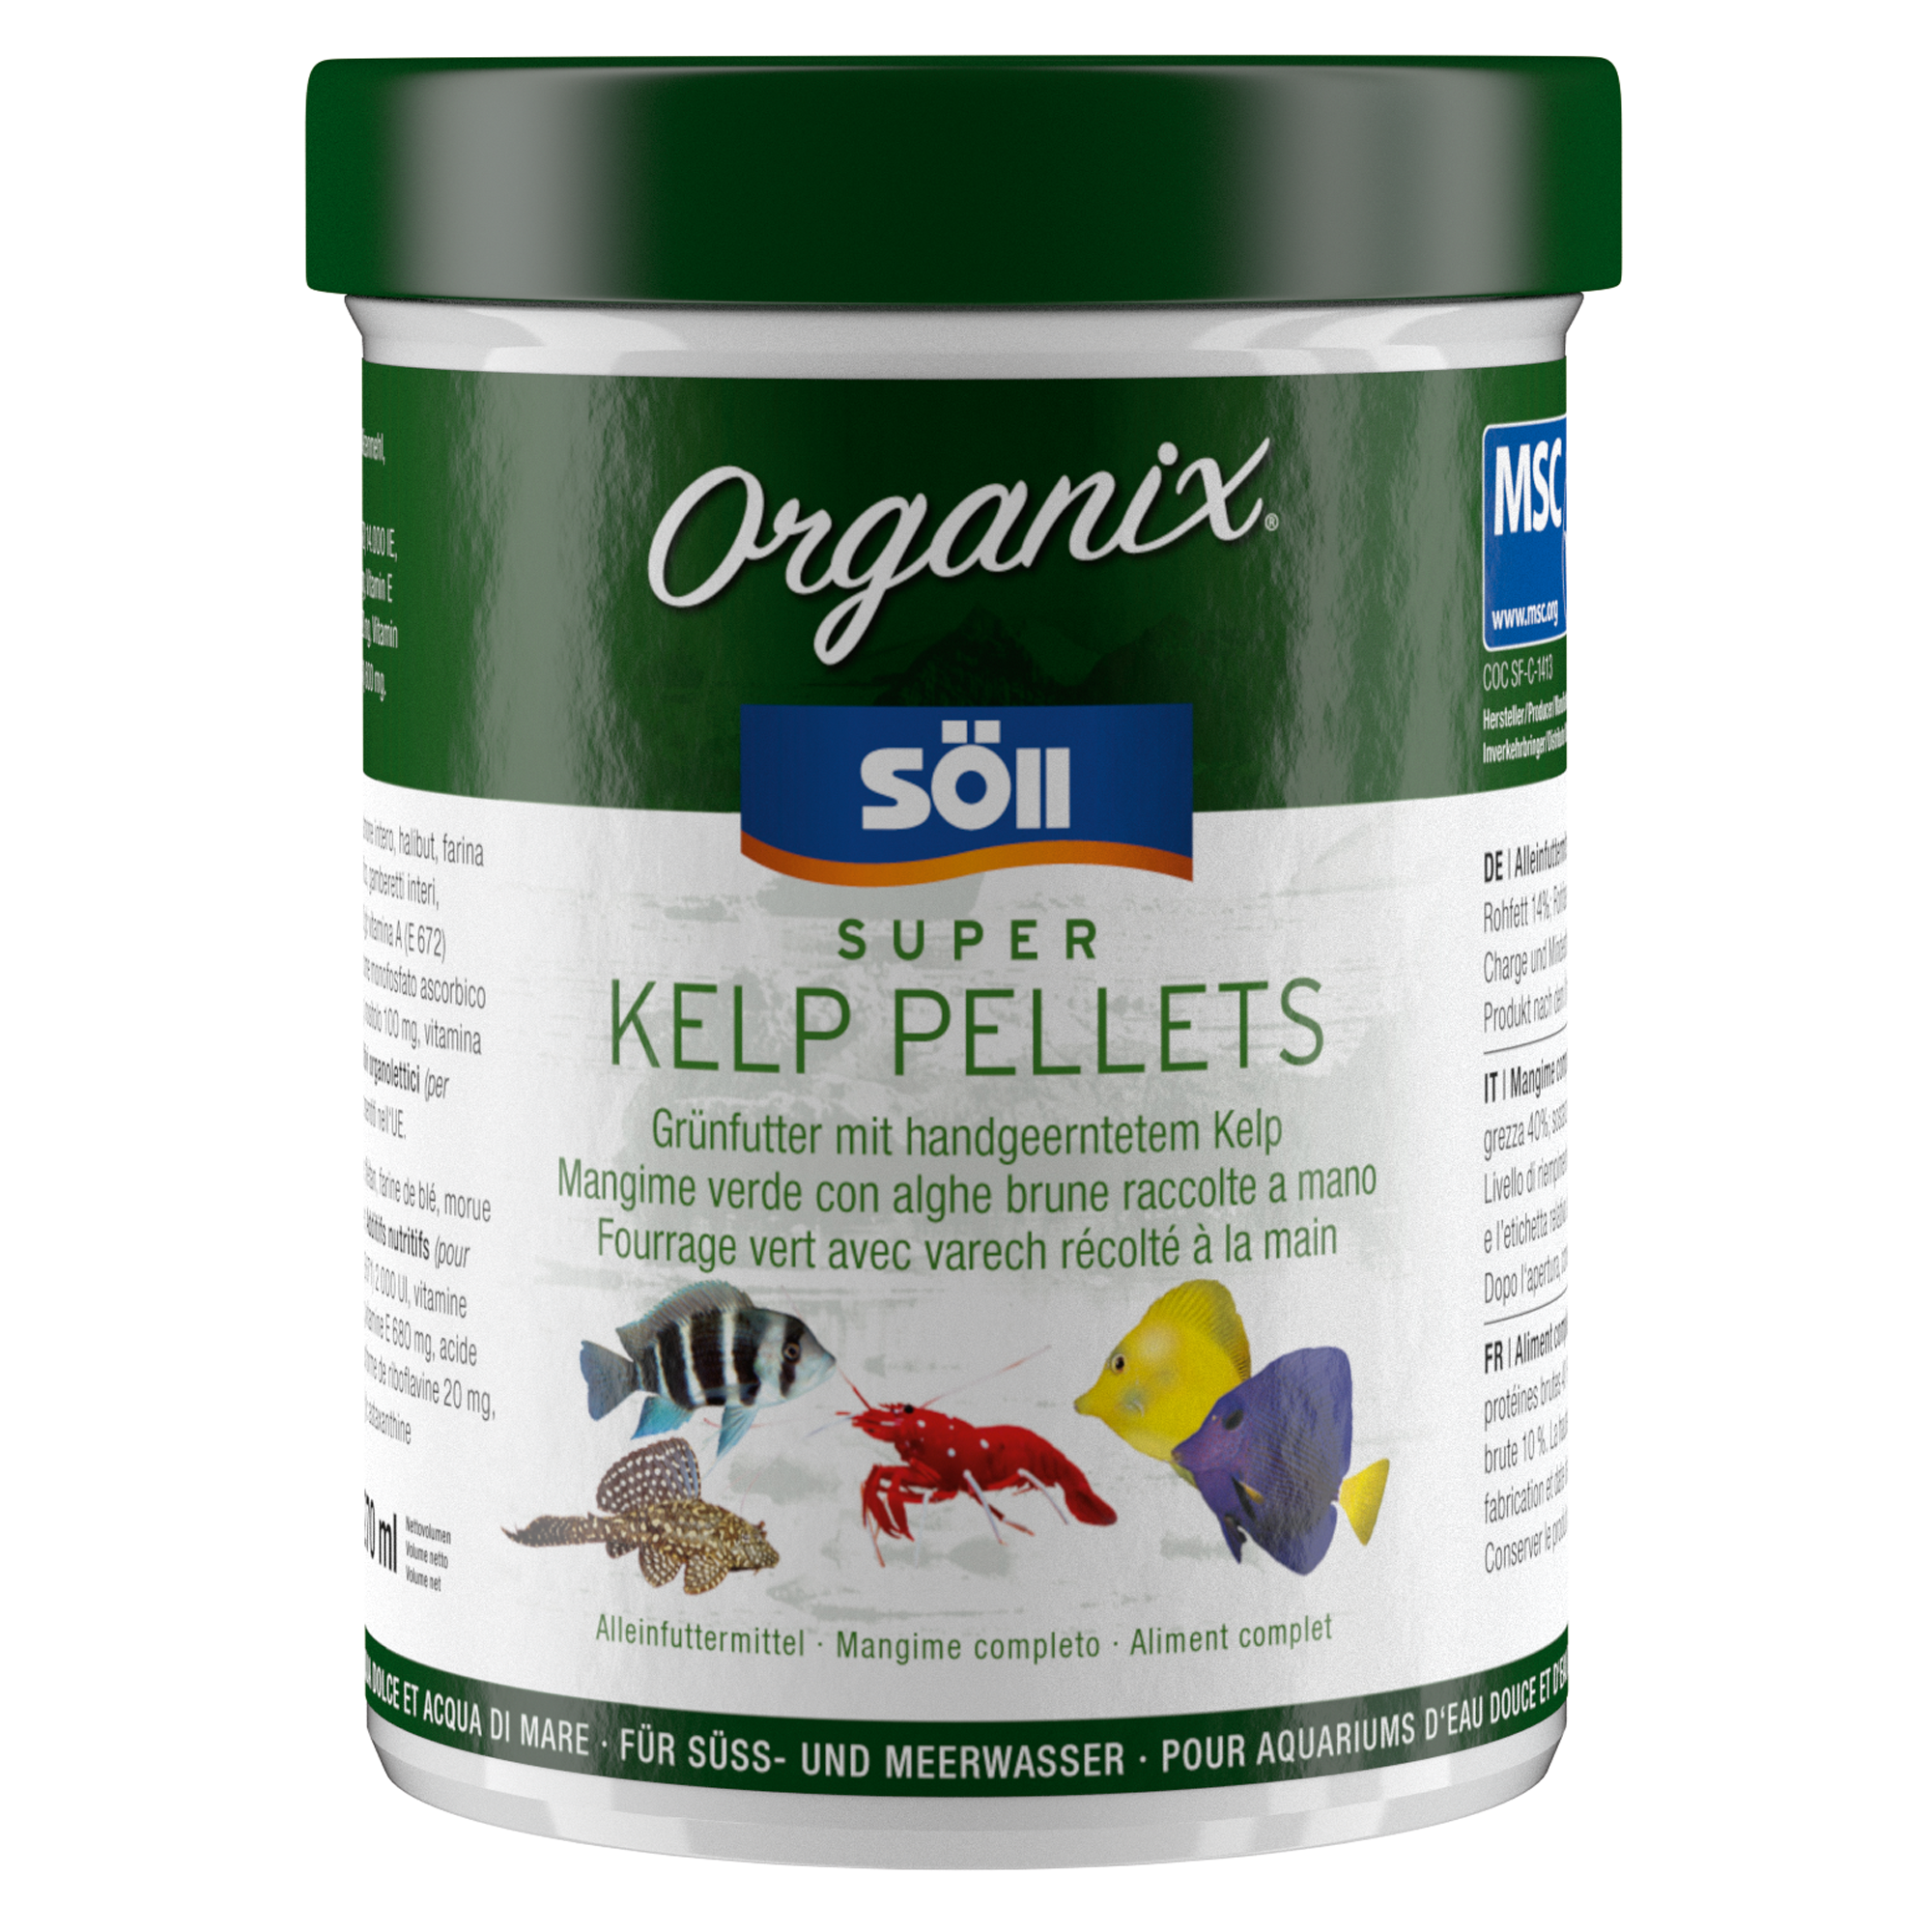 Organix Super Kelp Pellets 270 ml + product picture